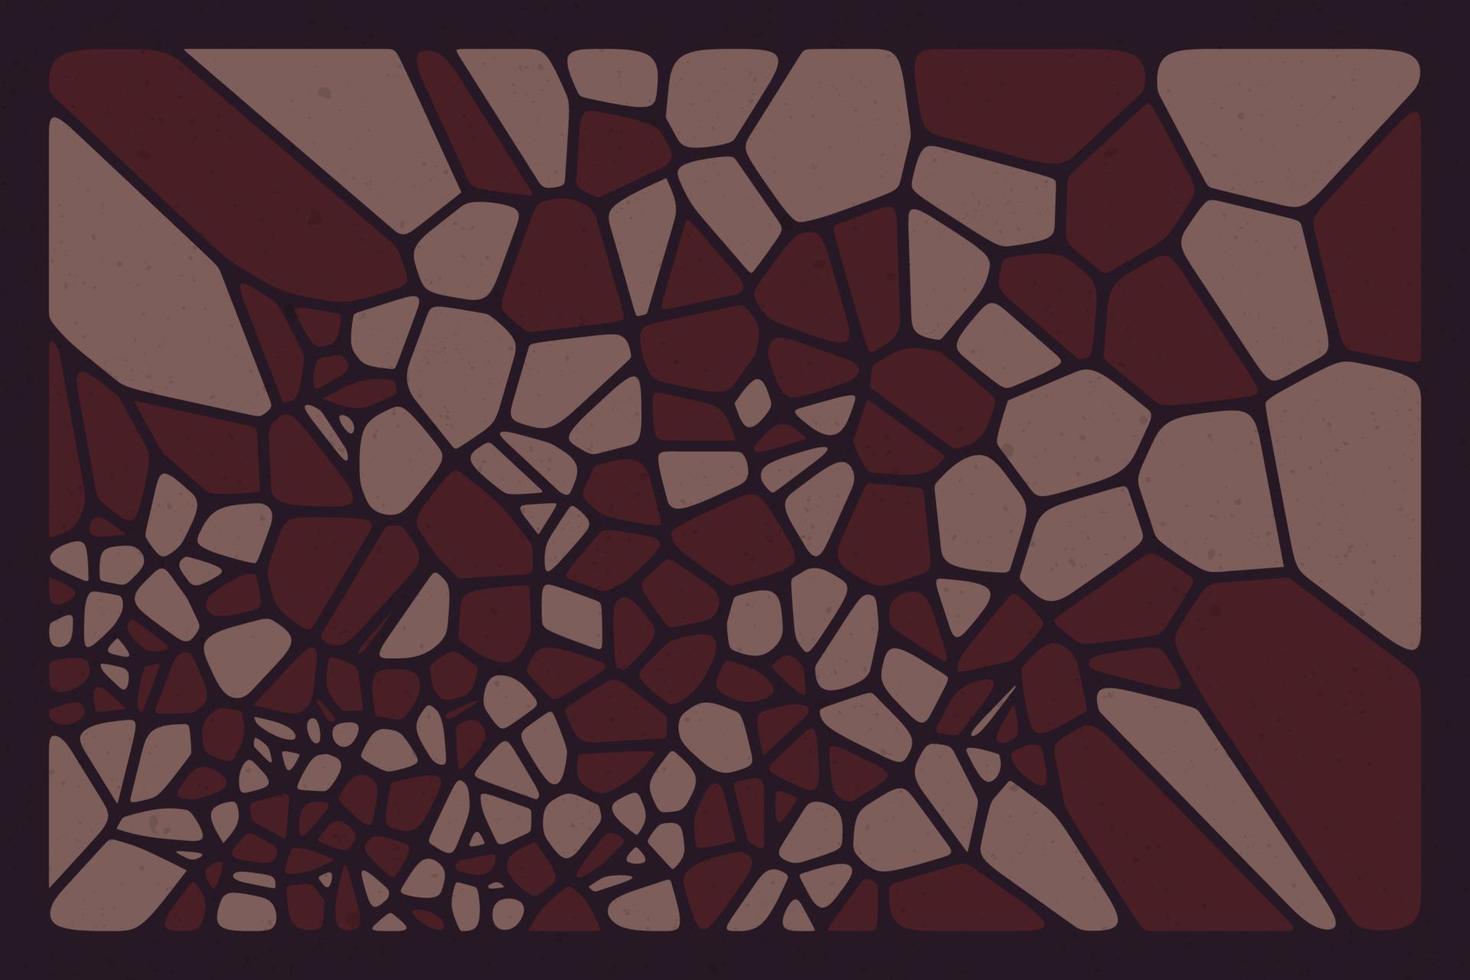 Abstract dark brown geometric Voronoi diagram background. Modern simple flat design. Polygonal mosaic pattern illustration vector